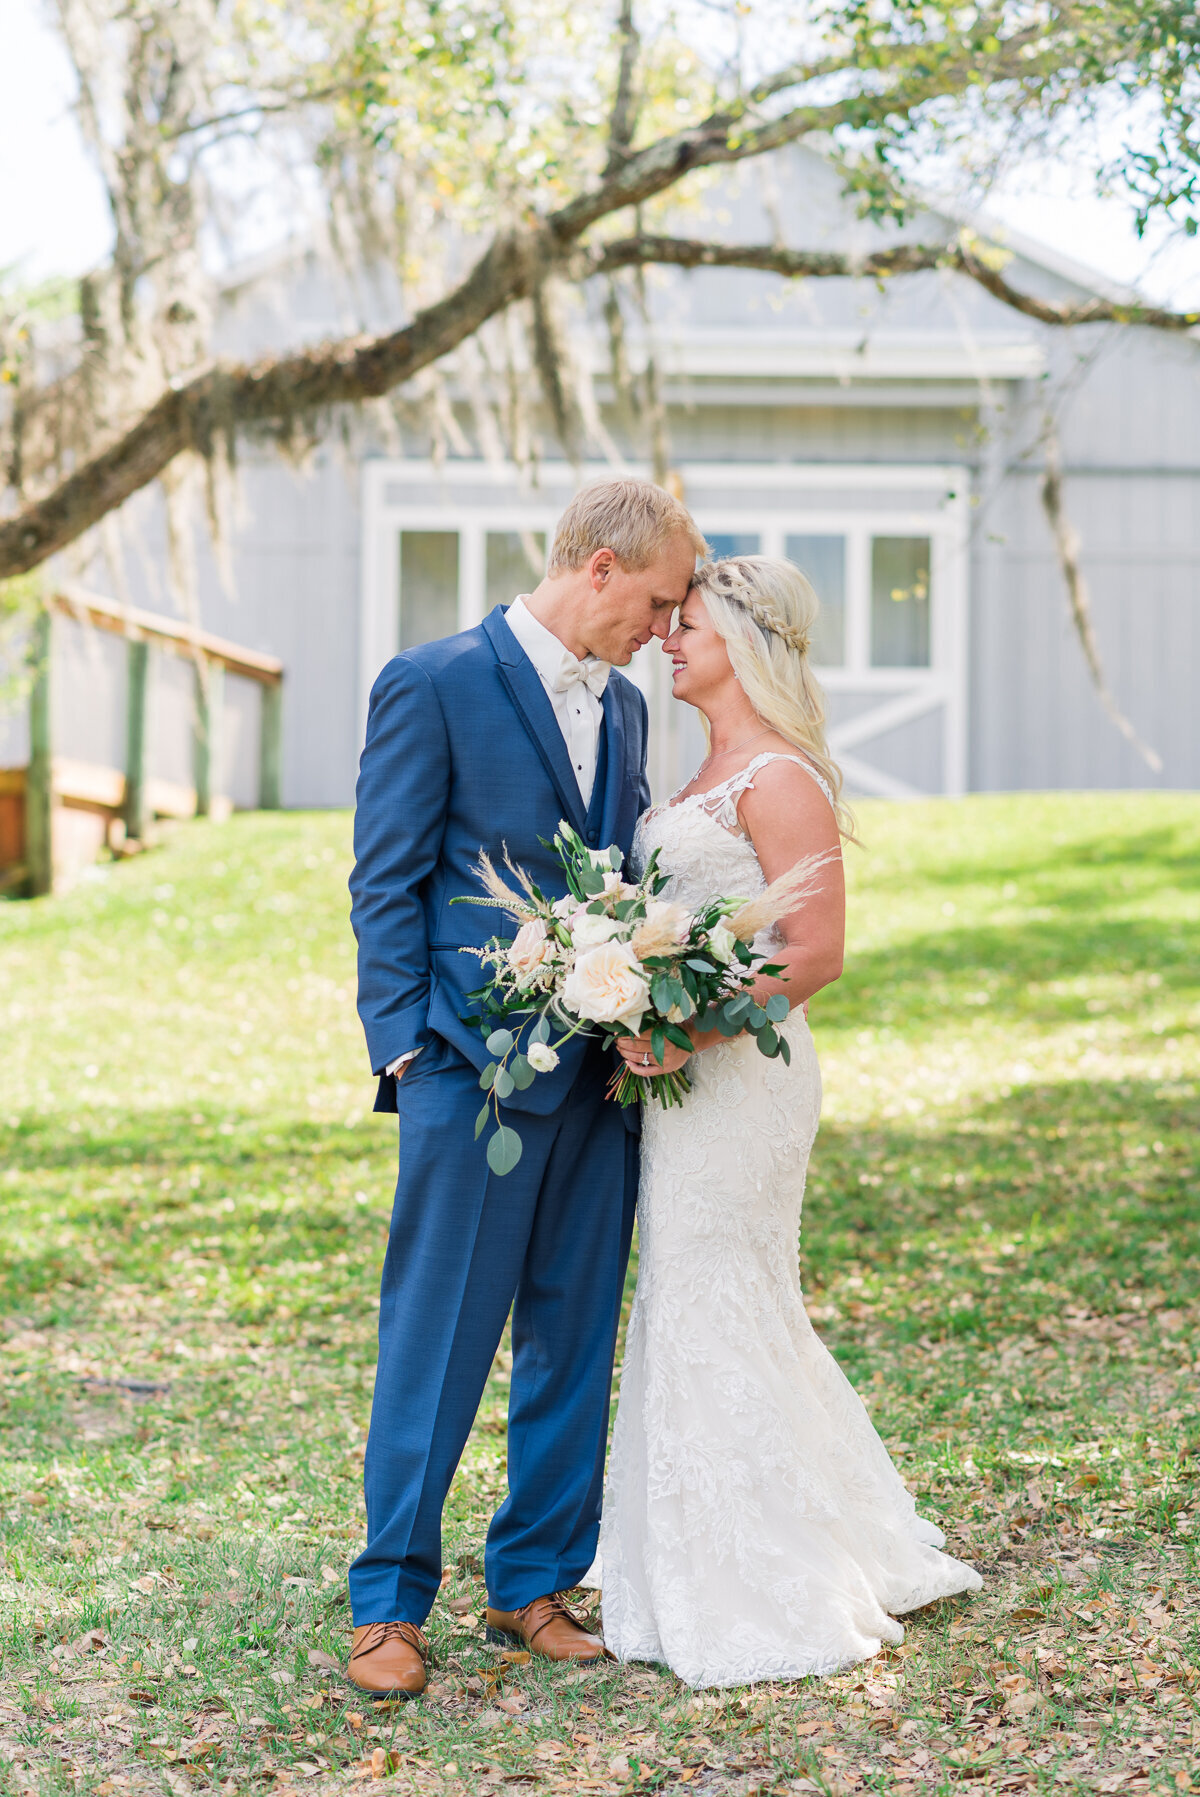 Amanda & Brent Up the Creek Farms Wedding Bride and Groom | Lisa Marshall Photography